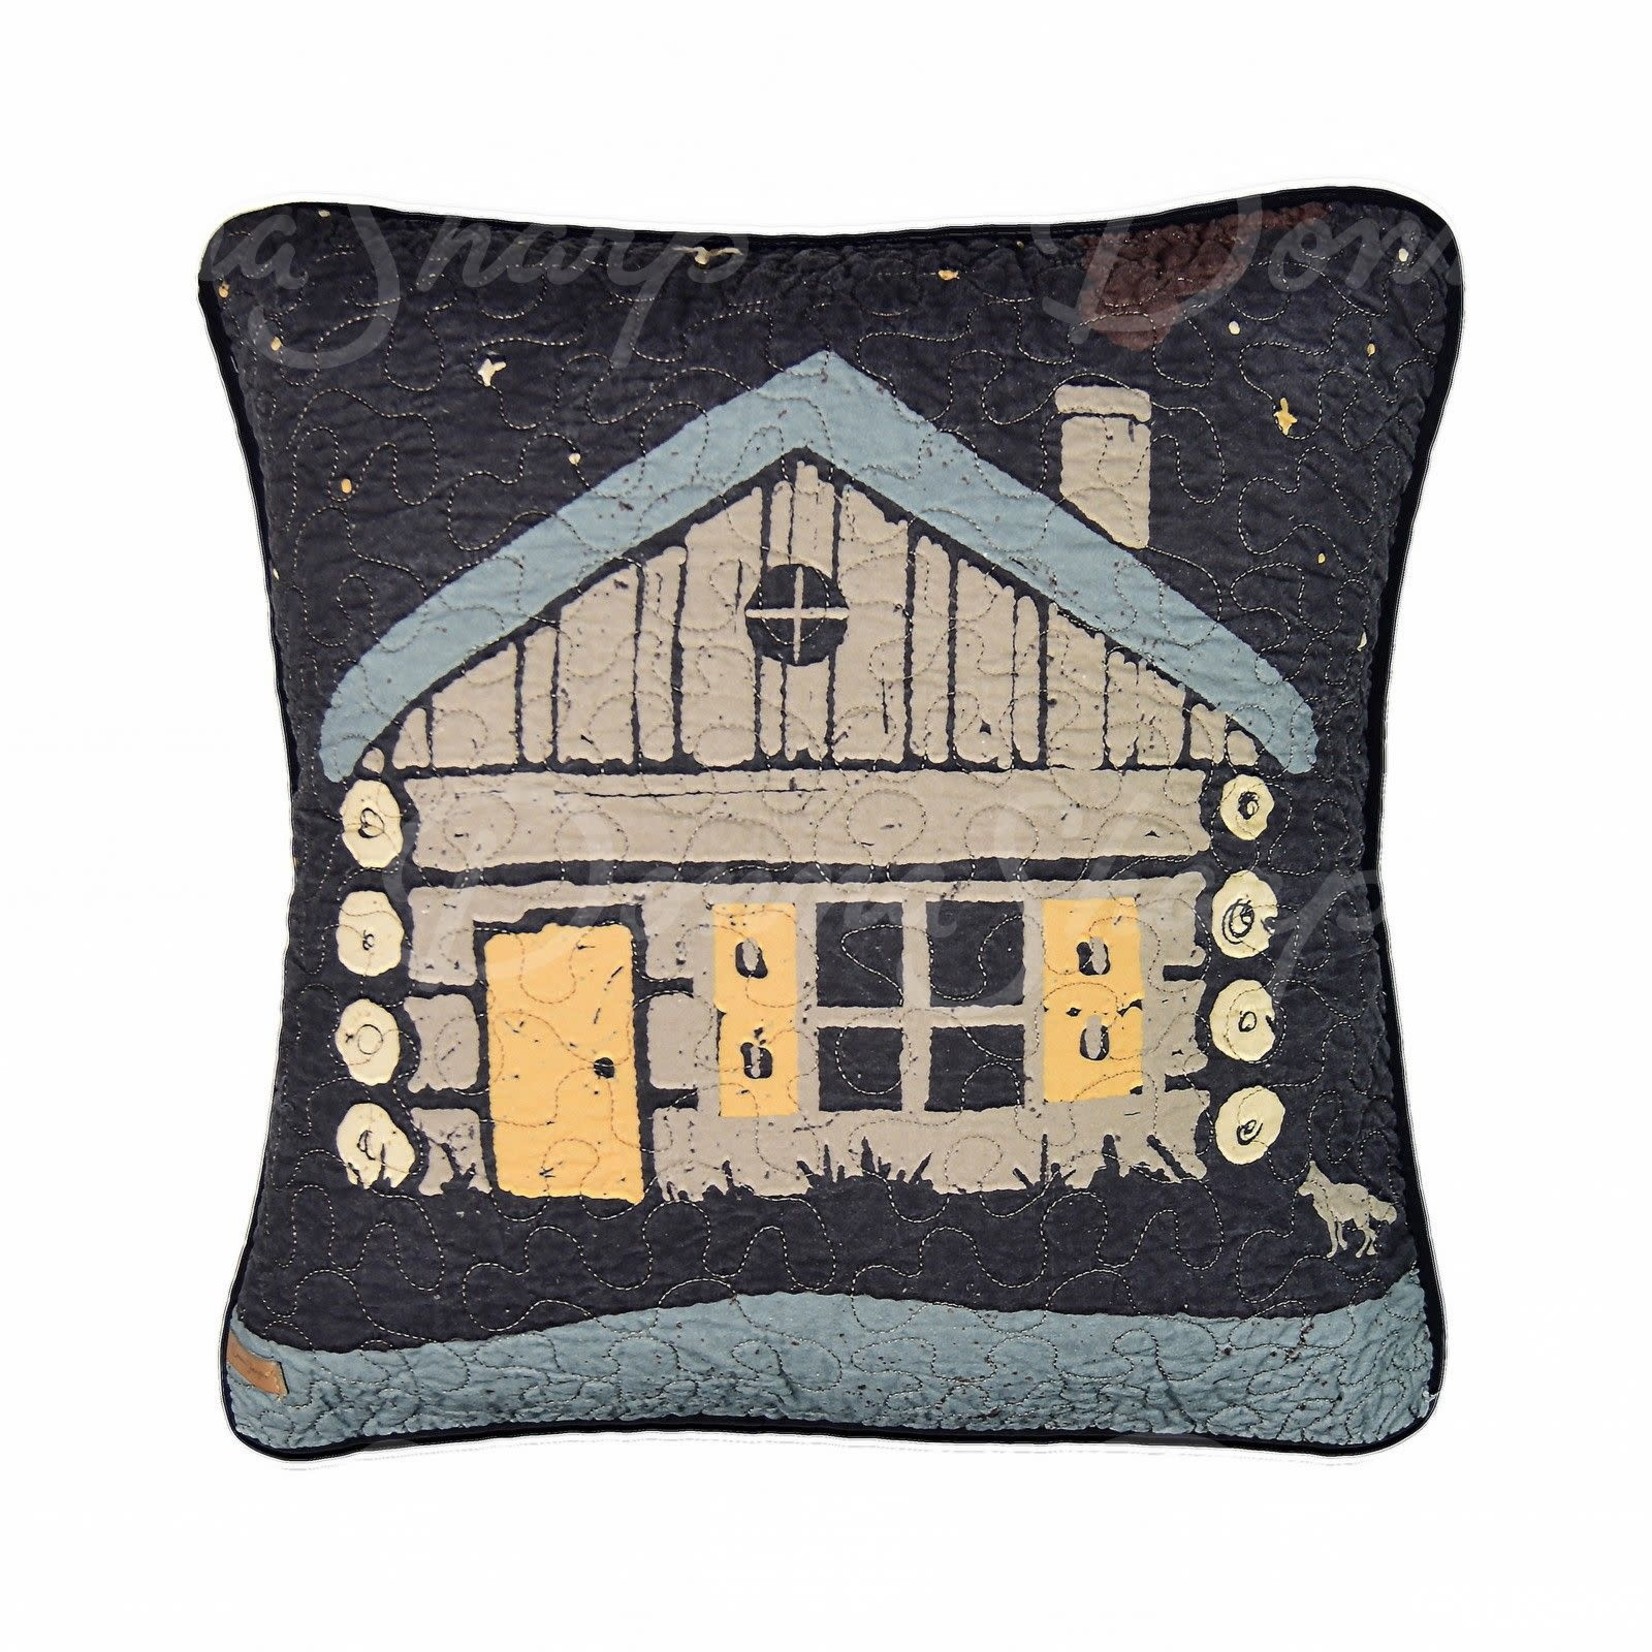 Moonlit cabin/feeling small pillow